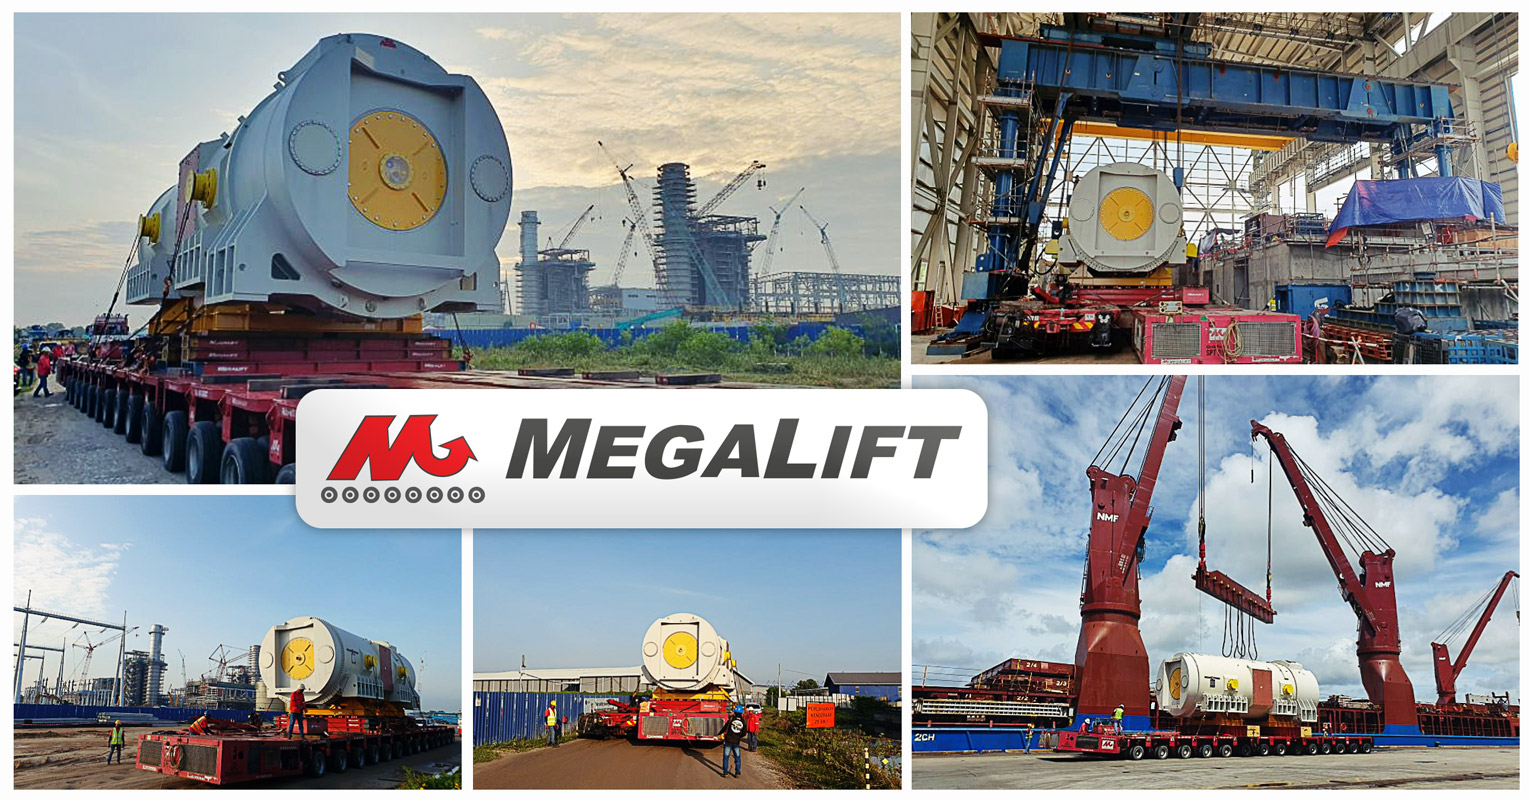 Megalift Handled 2 x Stators for the Pulau Indah Power Plant